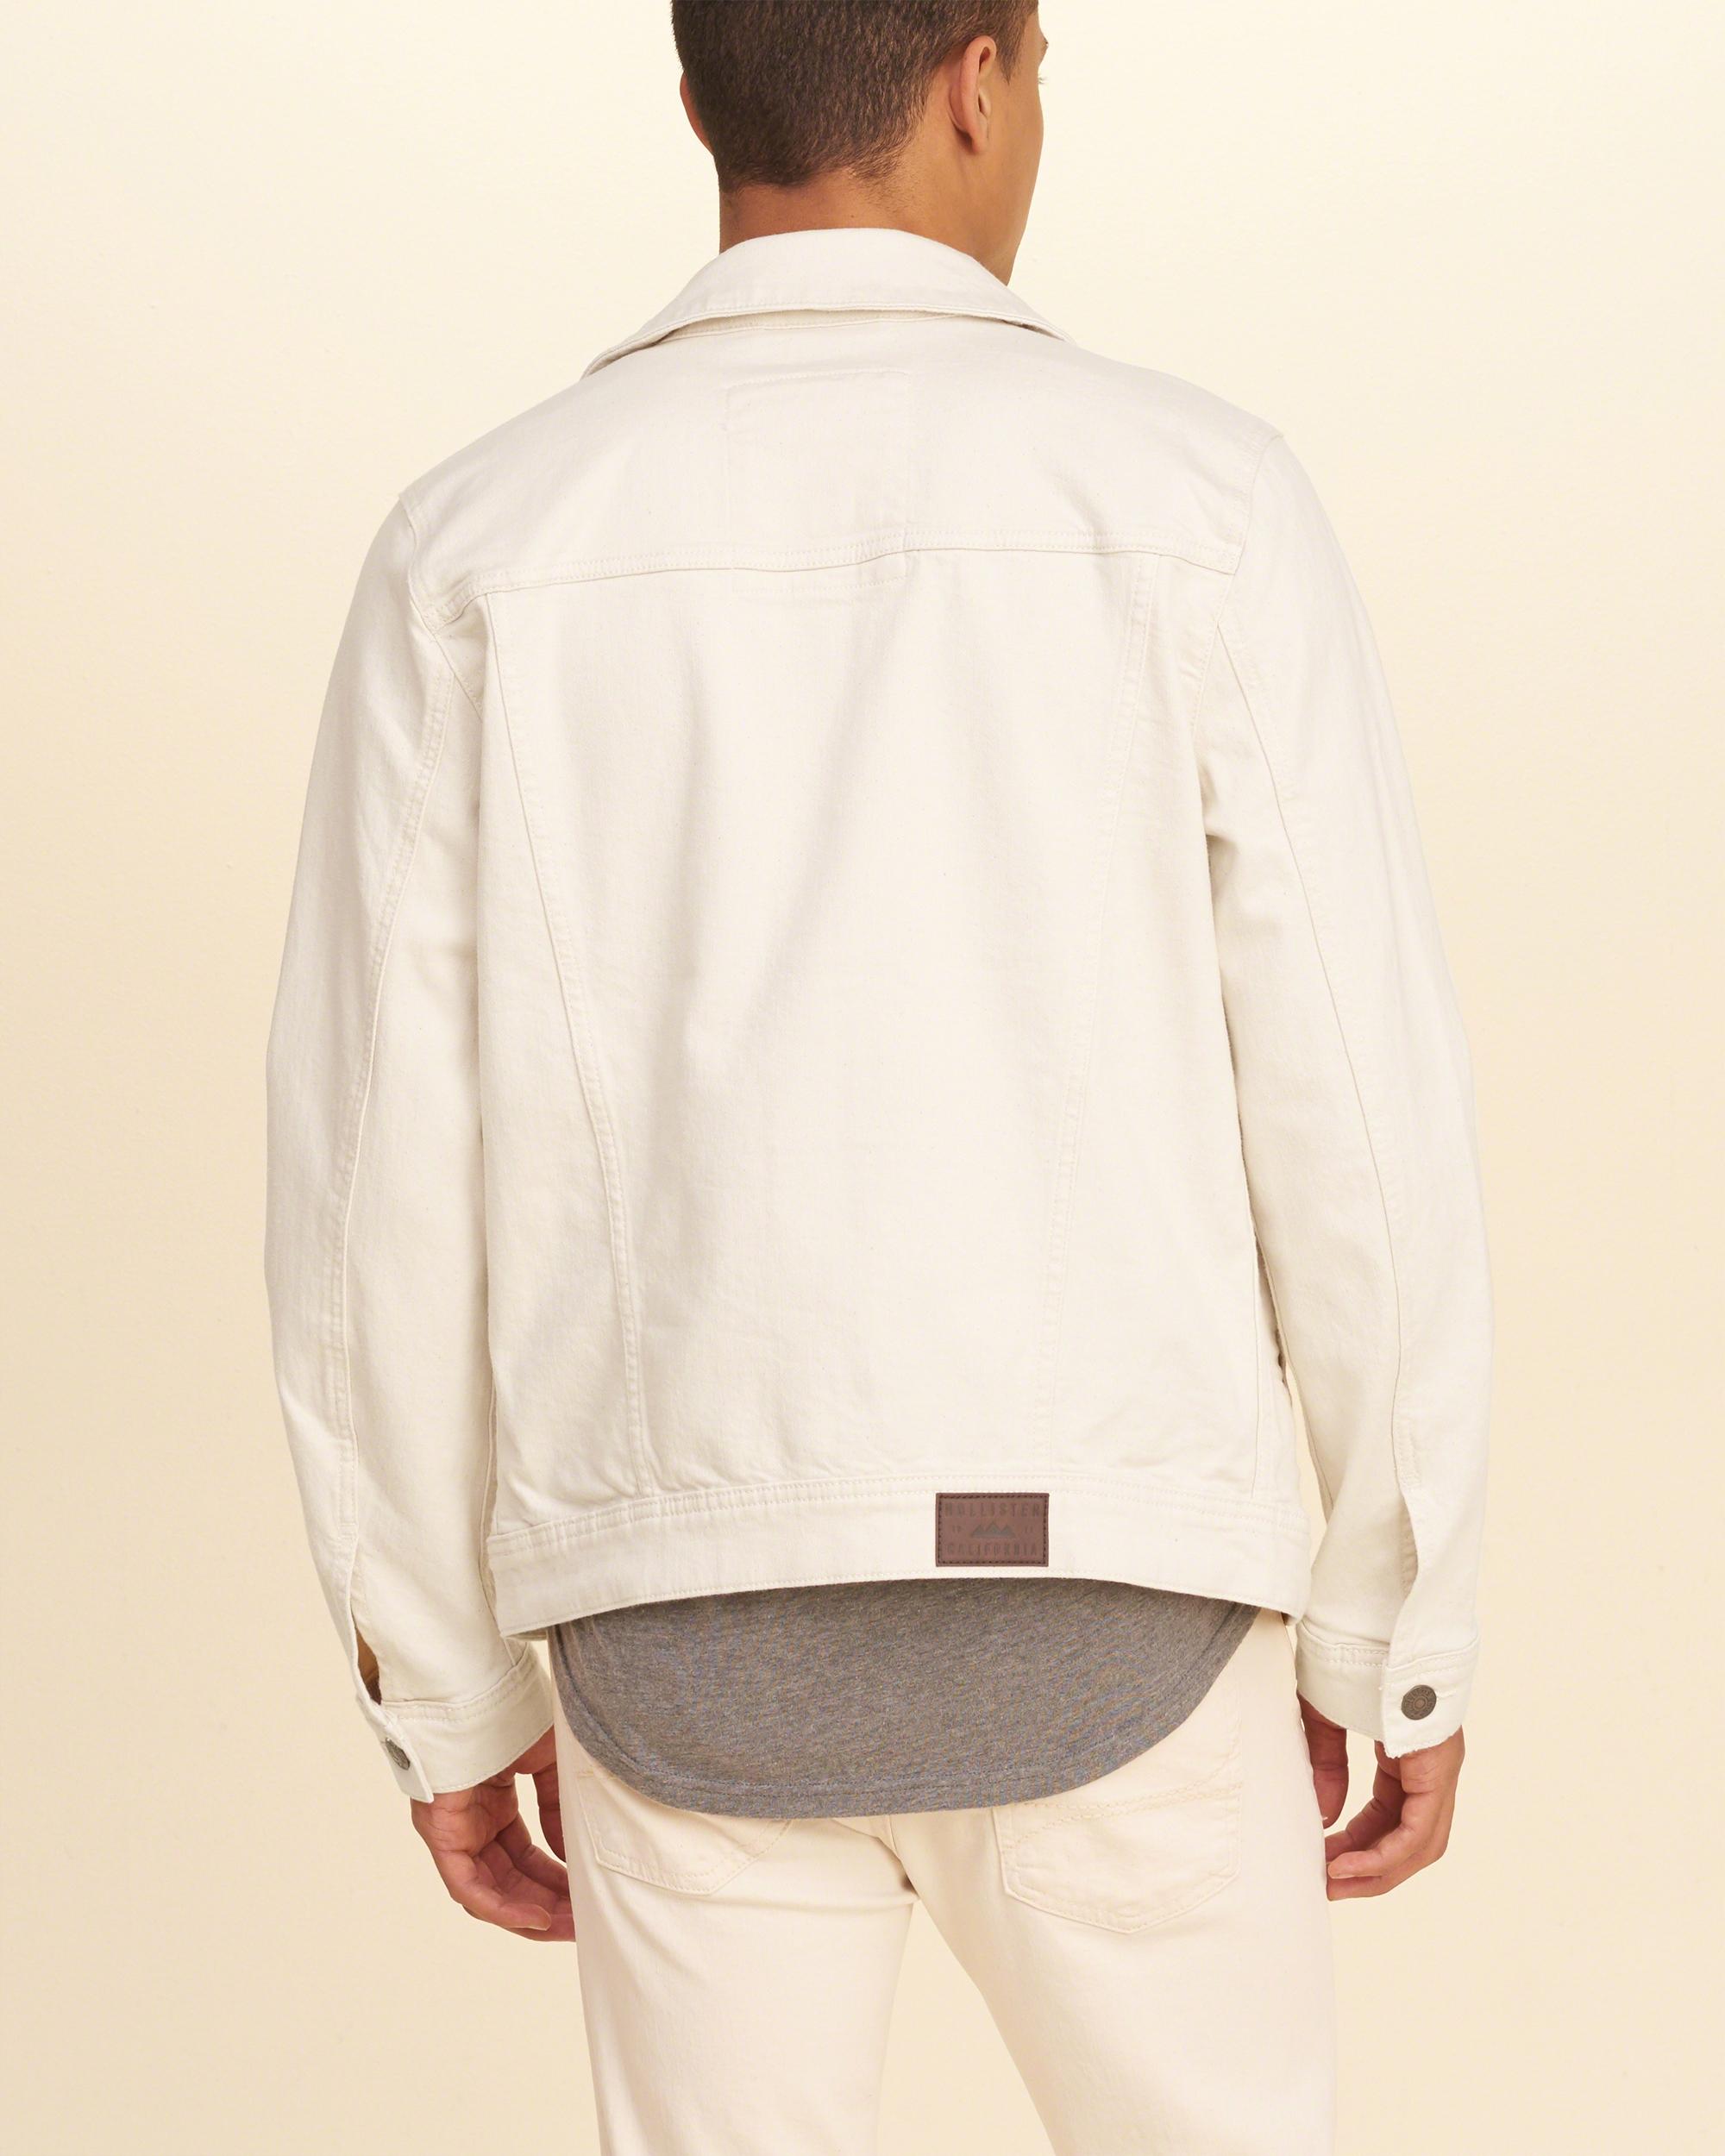 Lyst - Hollister Stretch Denim Jacket in White for Men